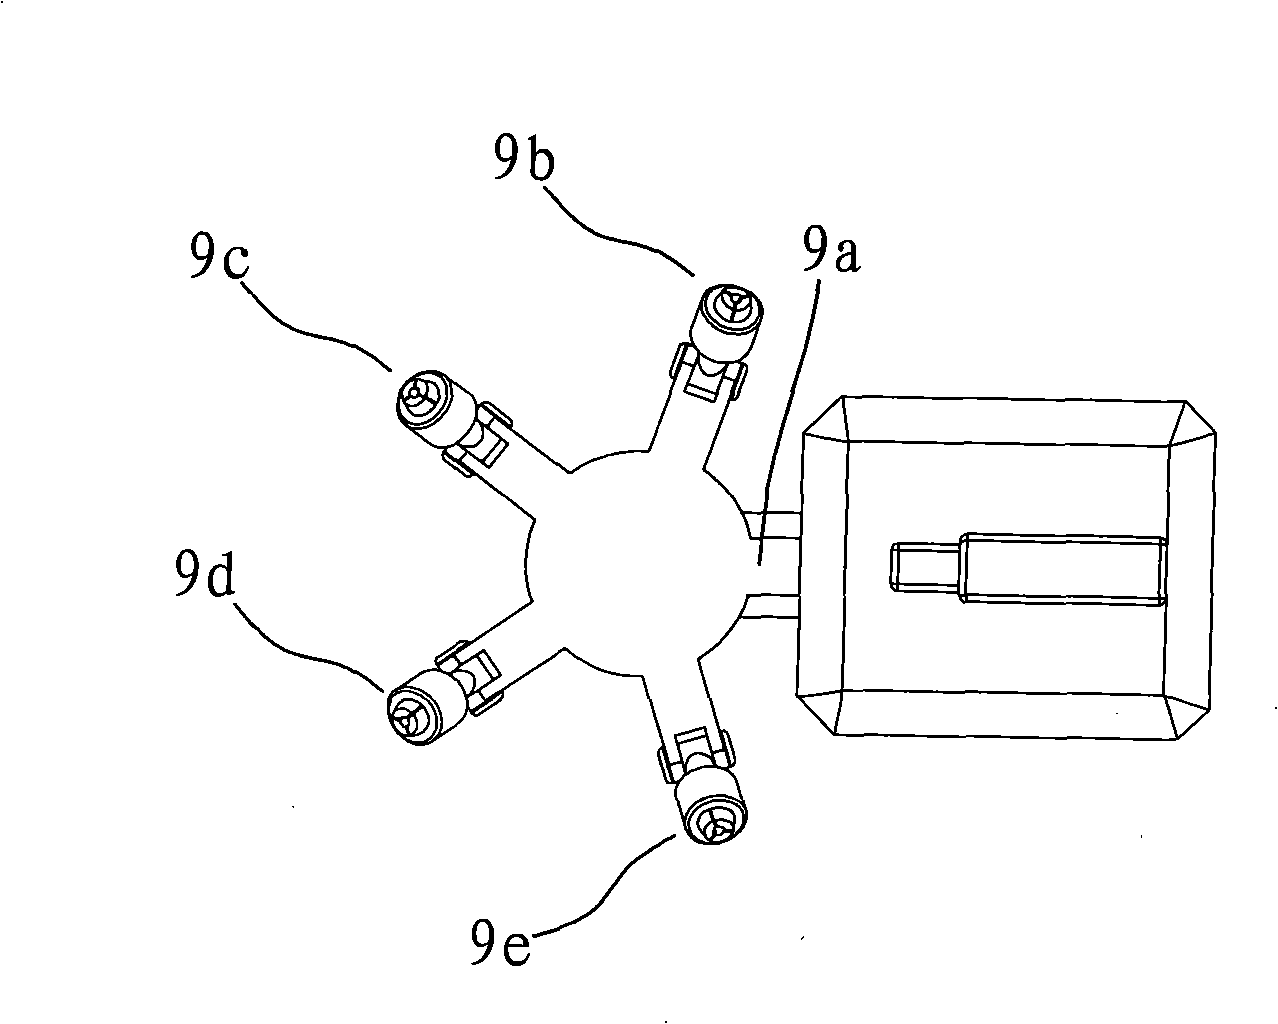 Multi-loading-unit rotary exchange type laser engraving device